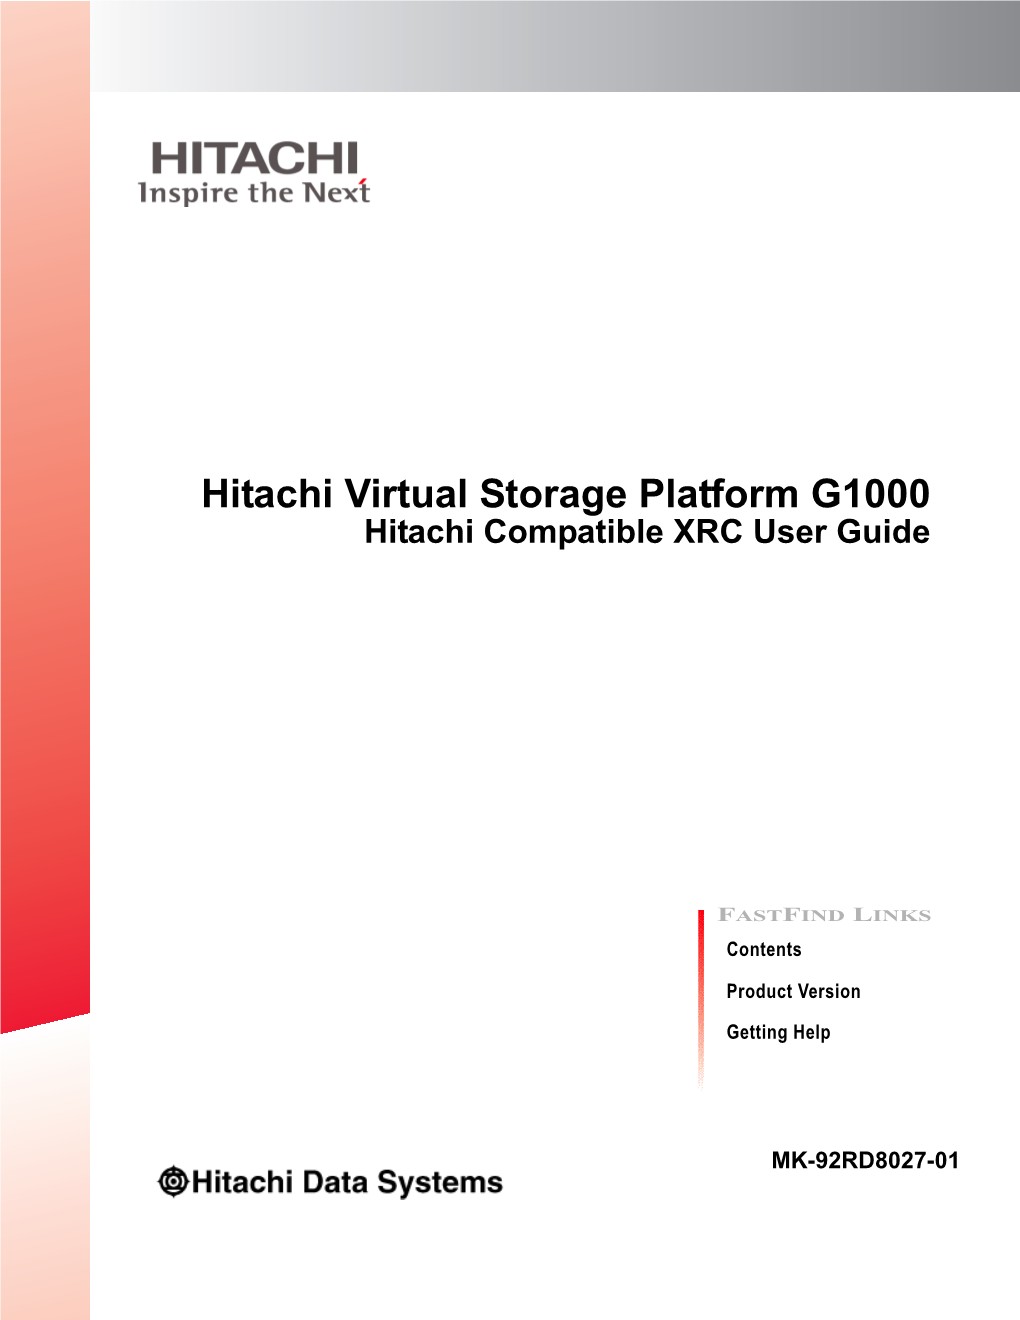 Hitachi Virtual Storage Platform G1000 Hitachi Compatible XRC User Guide